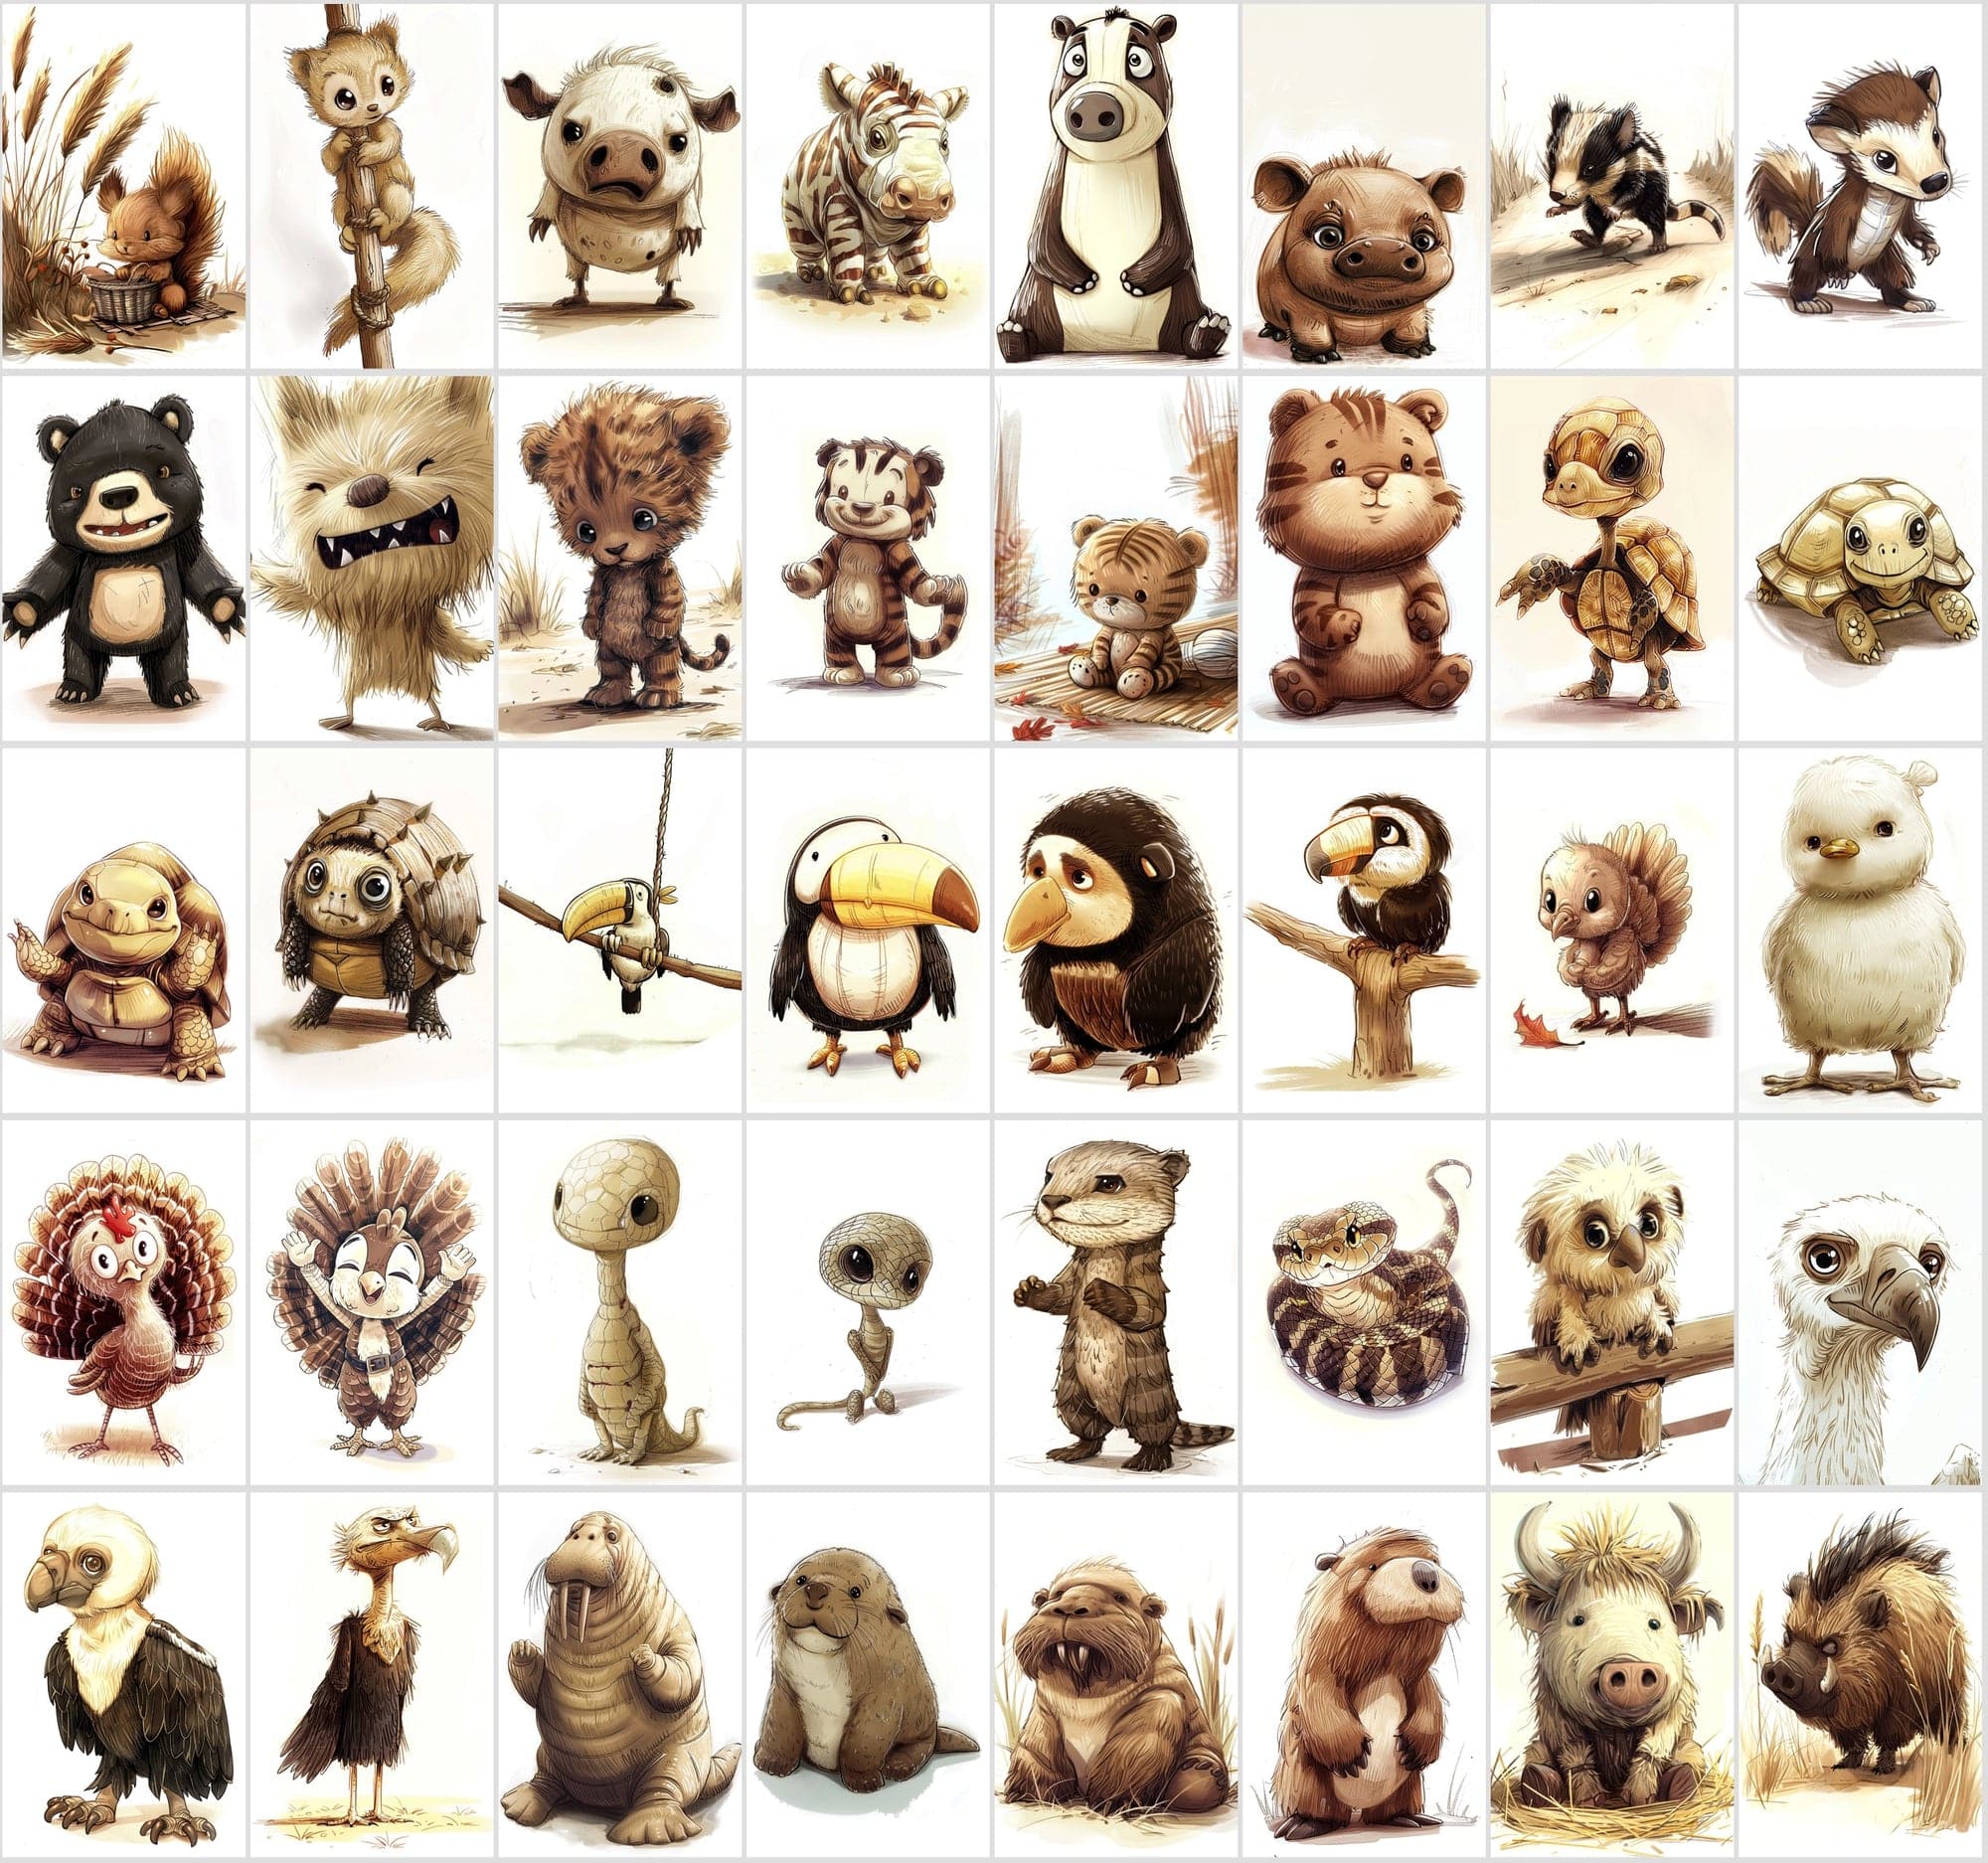 460 Pastel & Desaturated Animal Digital Images Digital Download Sumobundle